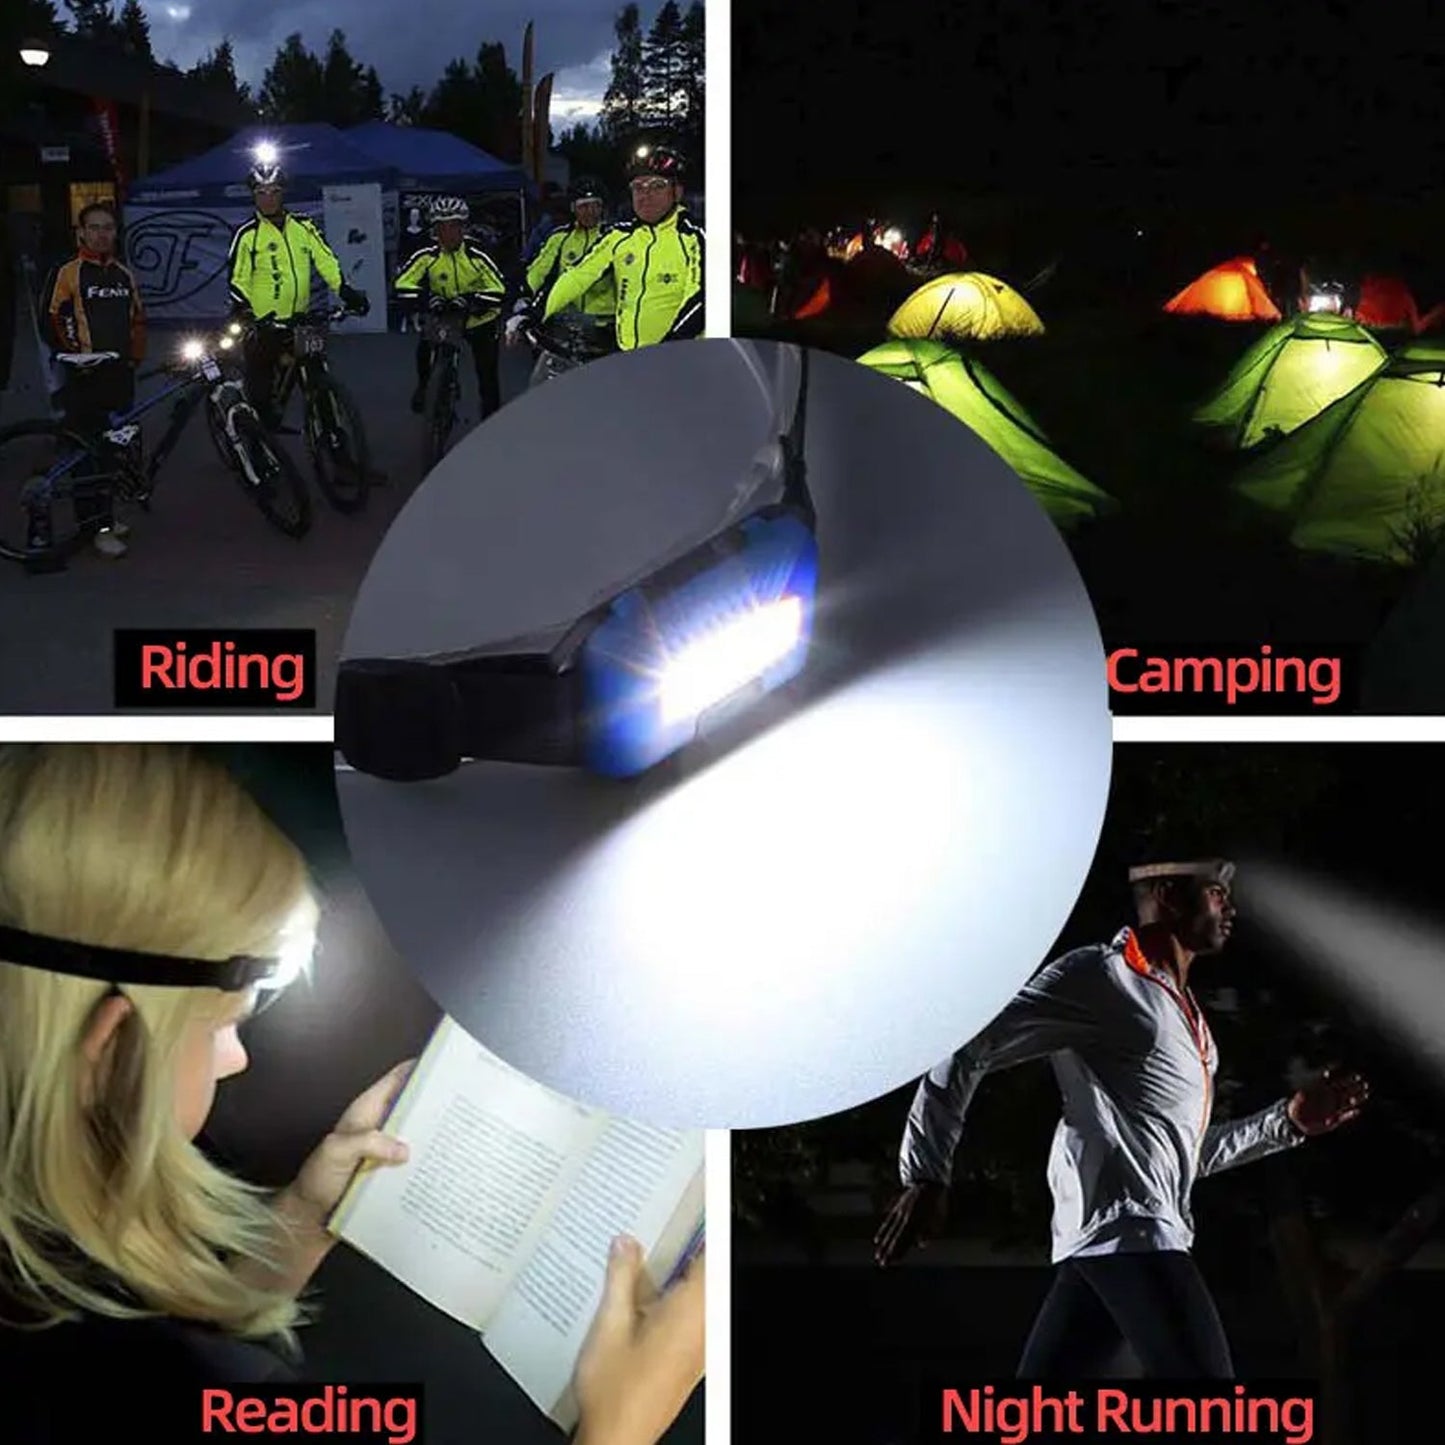 Head lamp Flashlight Waterproof Portable Lantern Headband Light Torch Lamp for Outdoor Camping Hiking Backpack Cycling 10W Cob